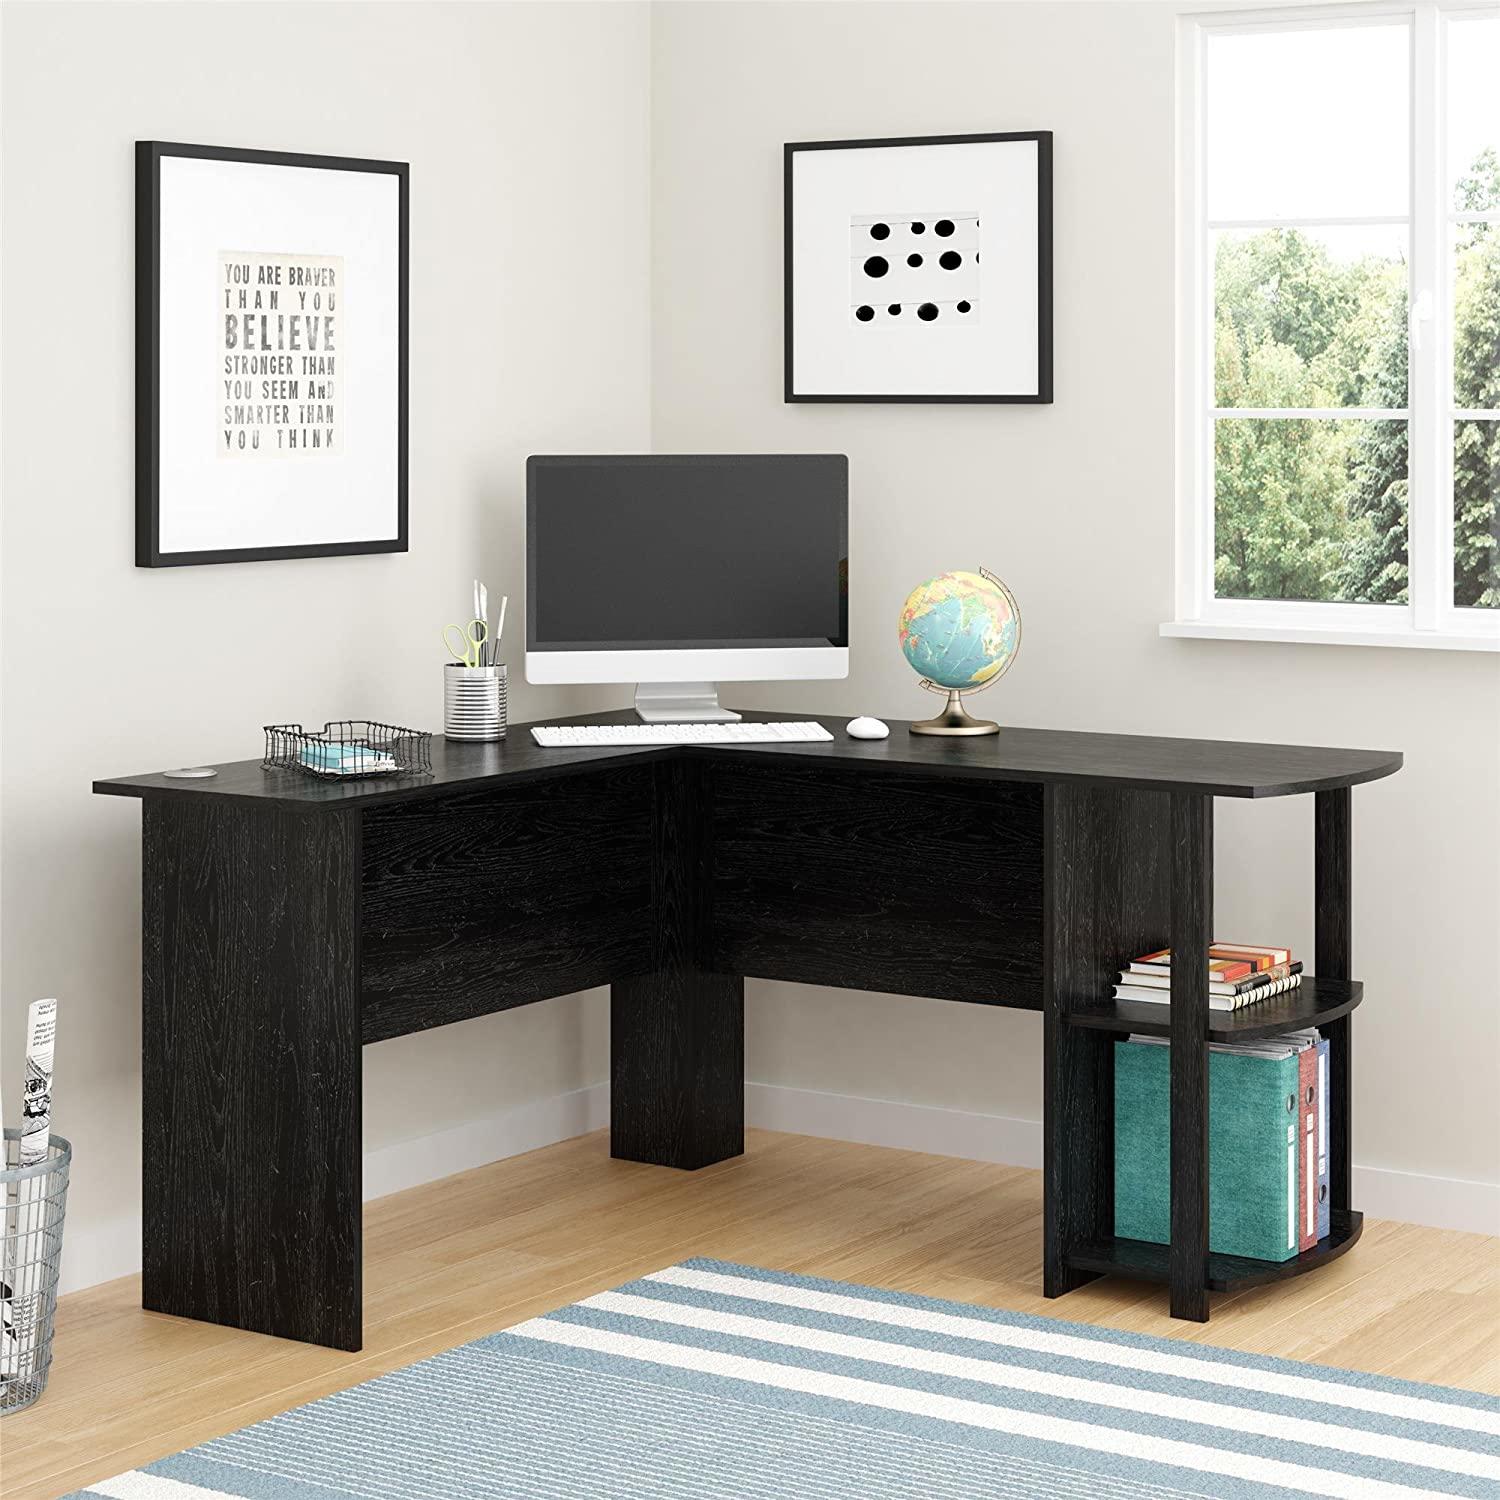 L-shaped desk with bookshelves: $105 